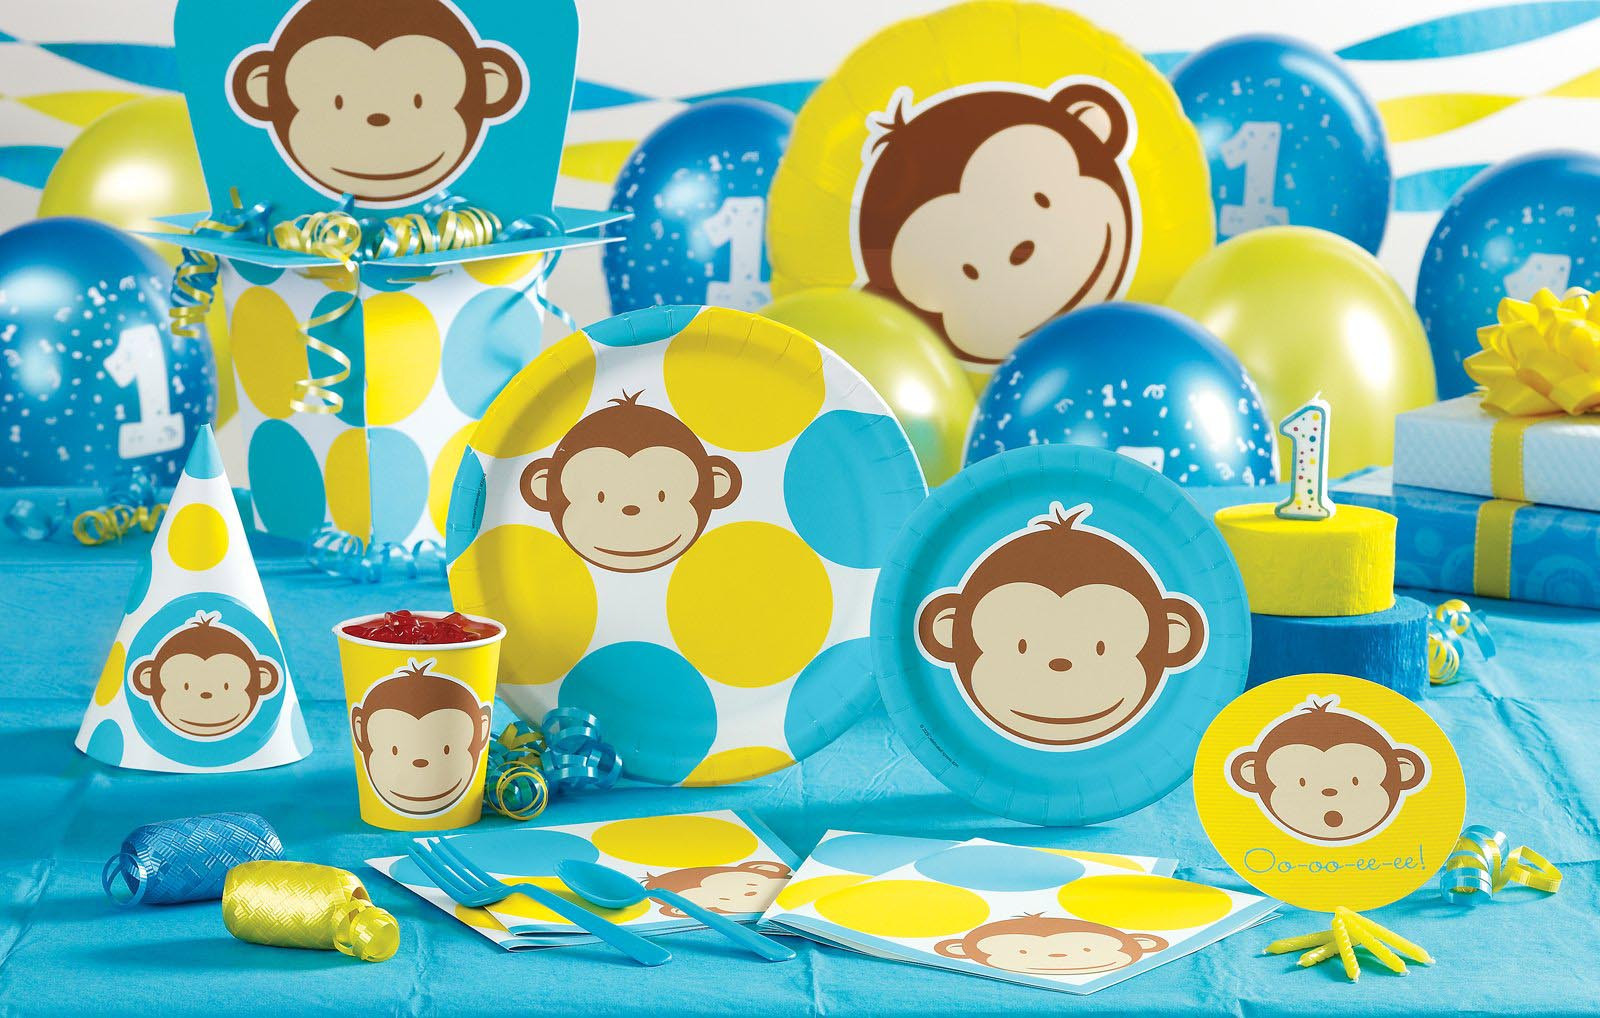 Monkey Birthday Party Supplies
 Monkey Birthday Party Decorations